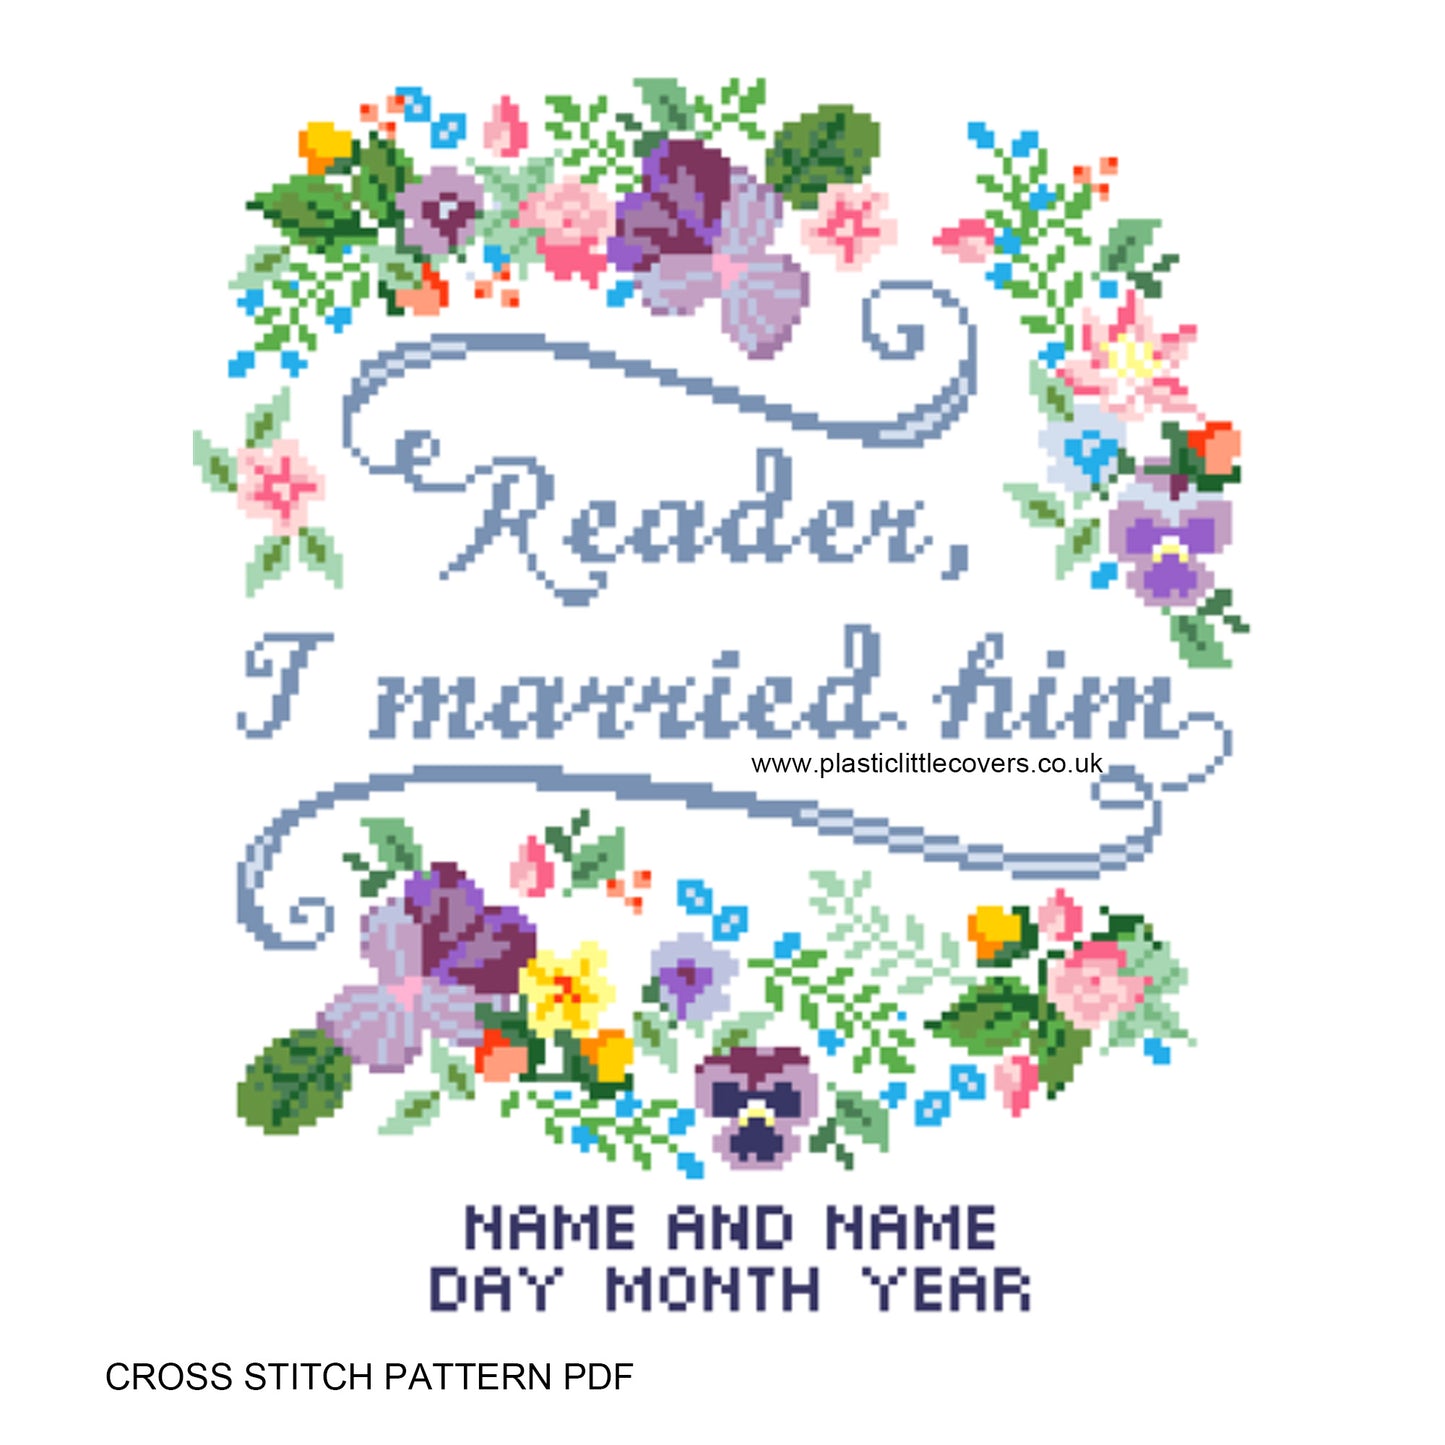 Reader, I Married Him - Cross Stitch Pattern PDF.